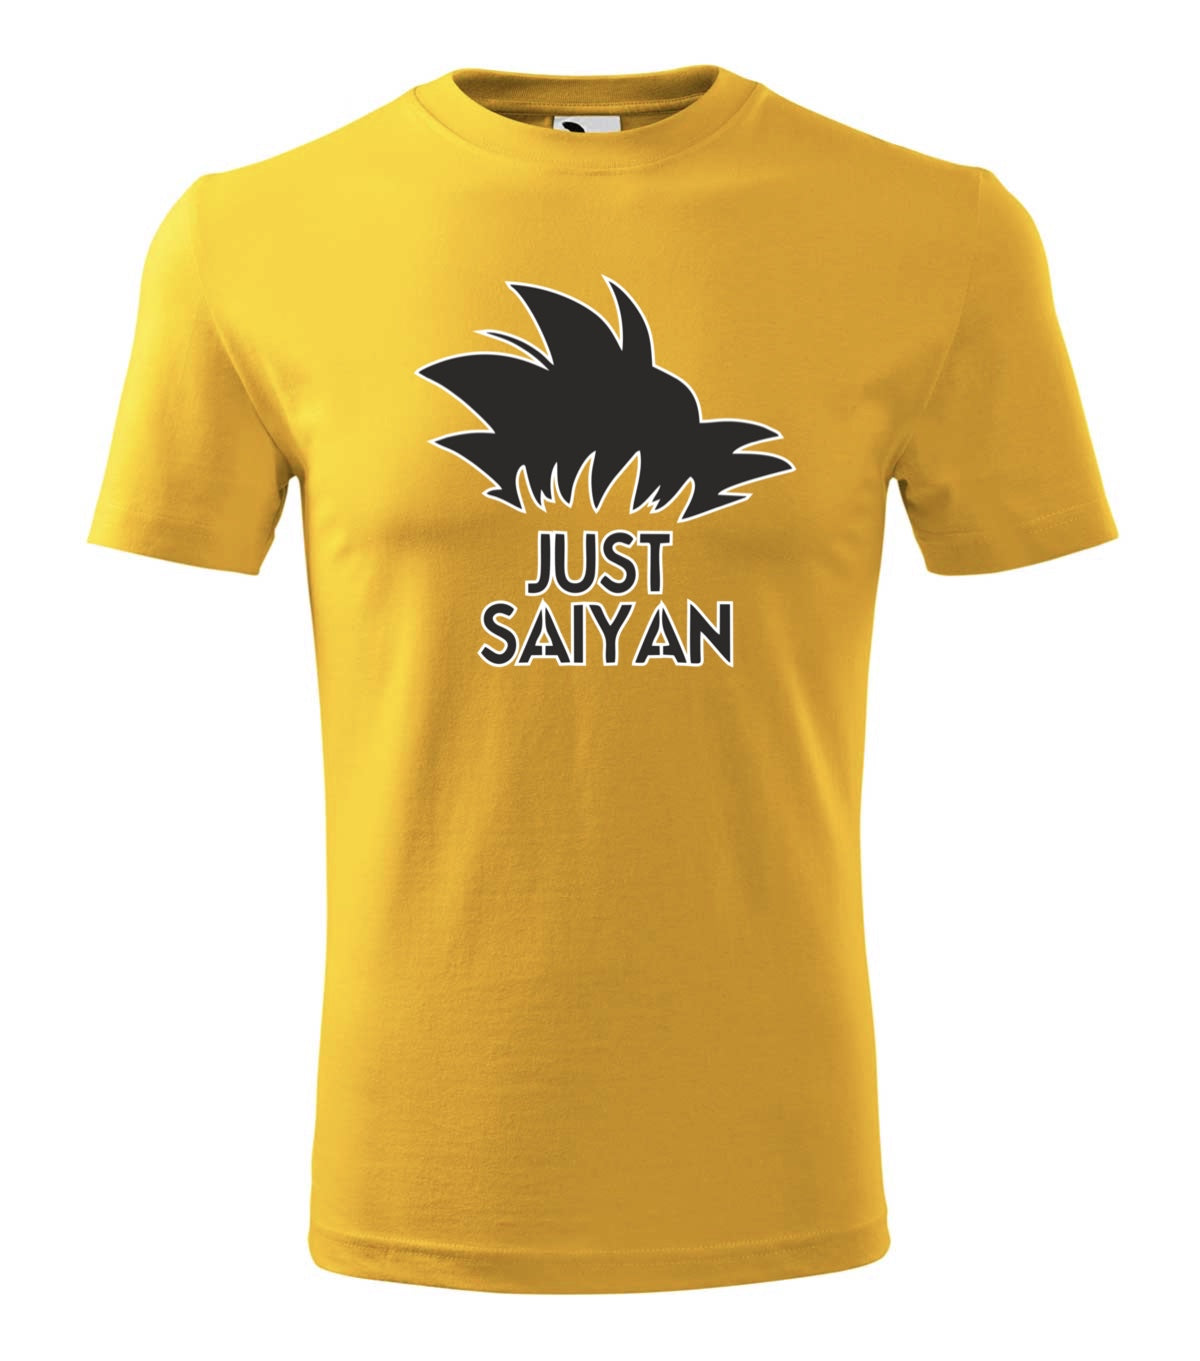 Just Saiyan férfi póló